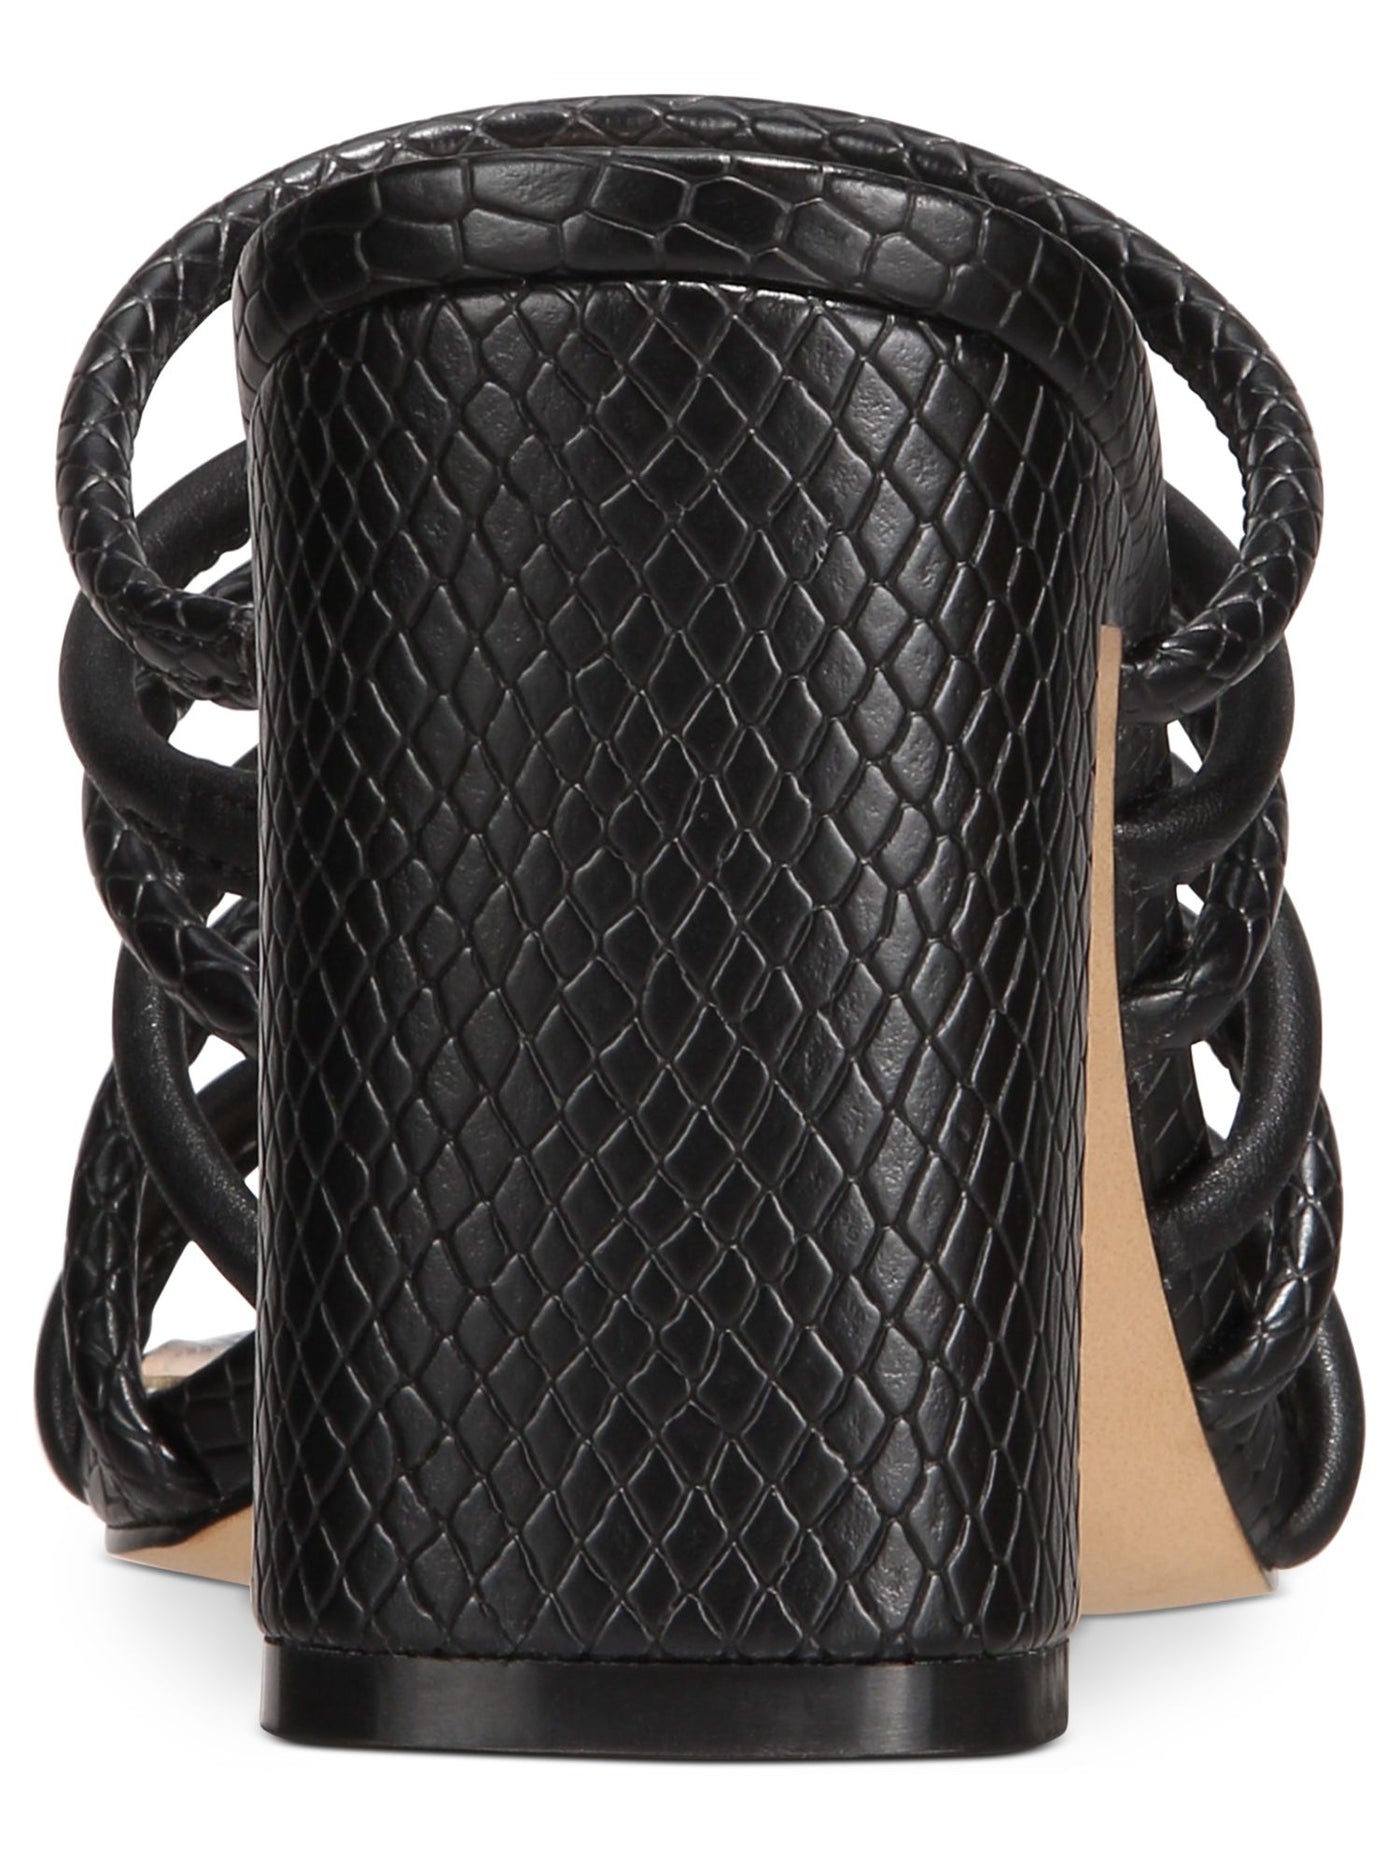 ALDO Womens Black Snake Print Strappy Padded Trelidda Square Toe Block Heel Slip On Slide Sandals Shoes 6.5 B